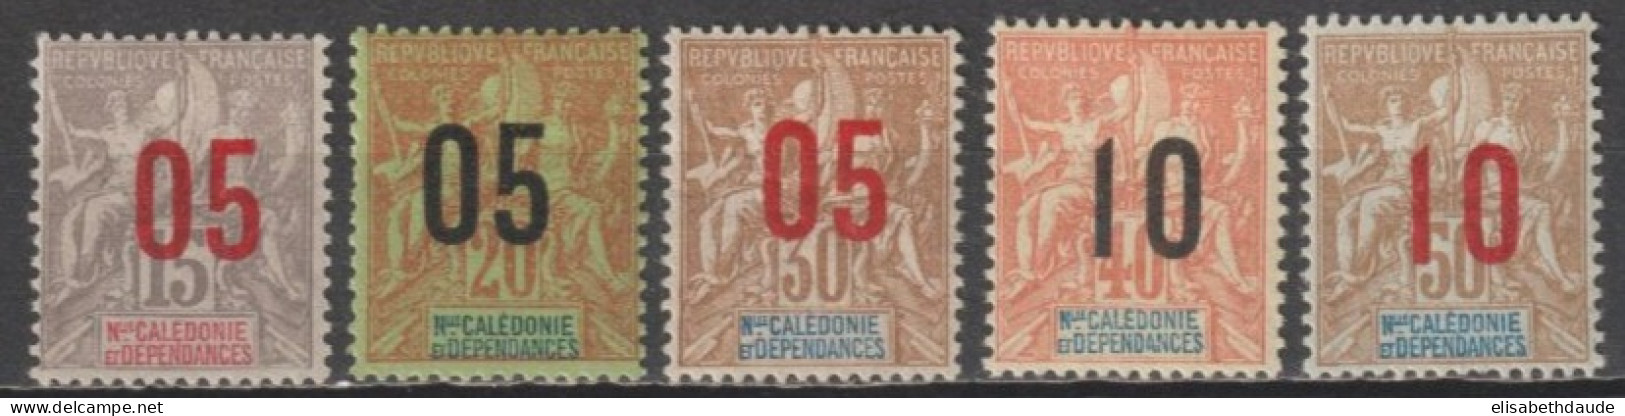 NOUVELLE CALEDONIE - 1912 - SERIE COMPLETE YVERT N°105/109 * MLH - COTE = 12.5 EUR - Ungebraucht